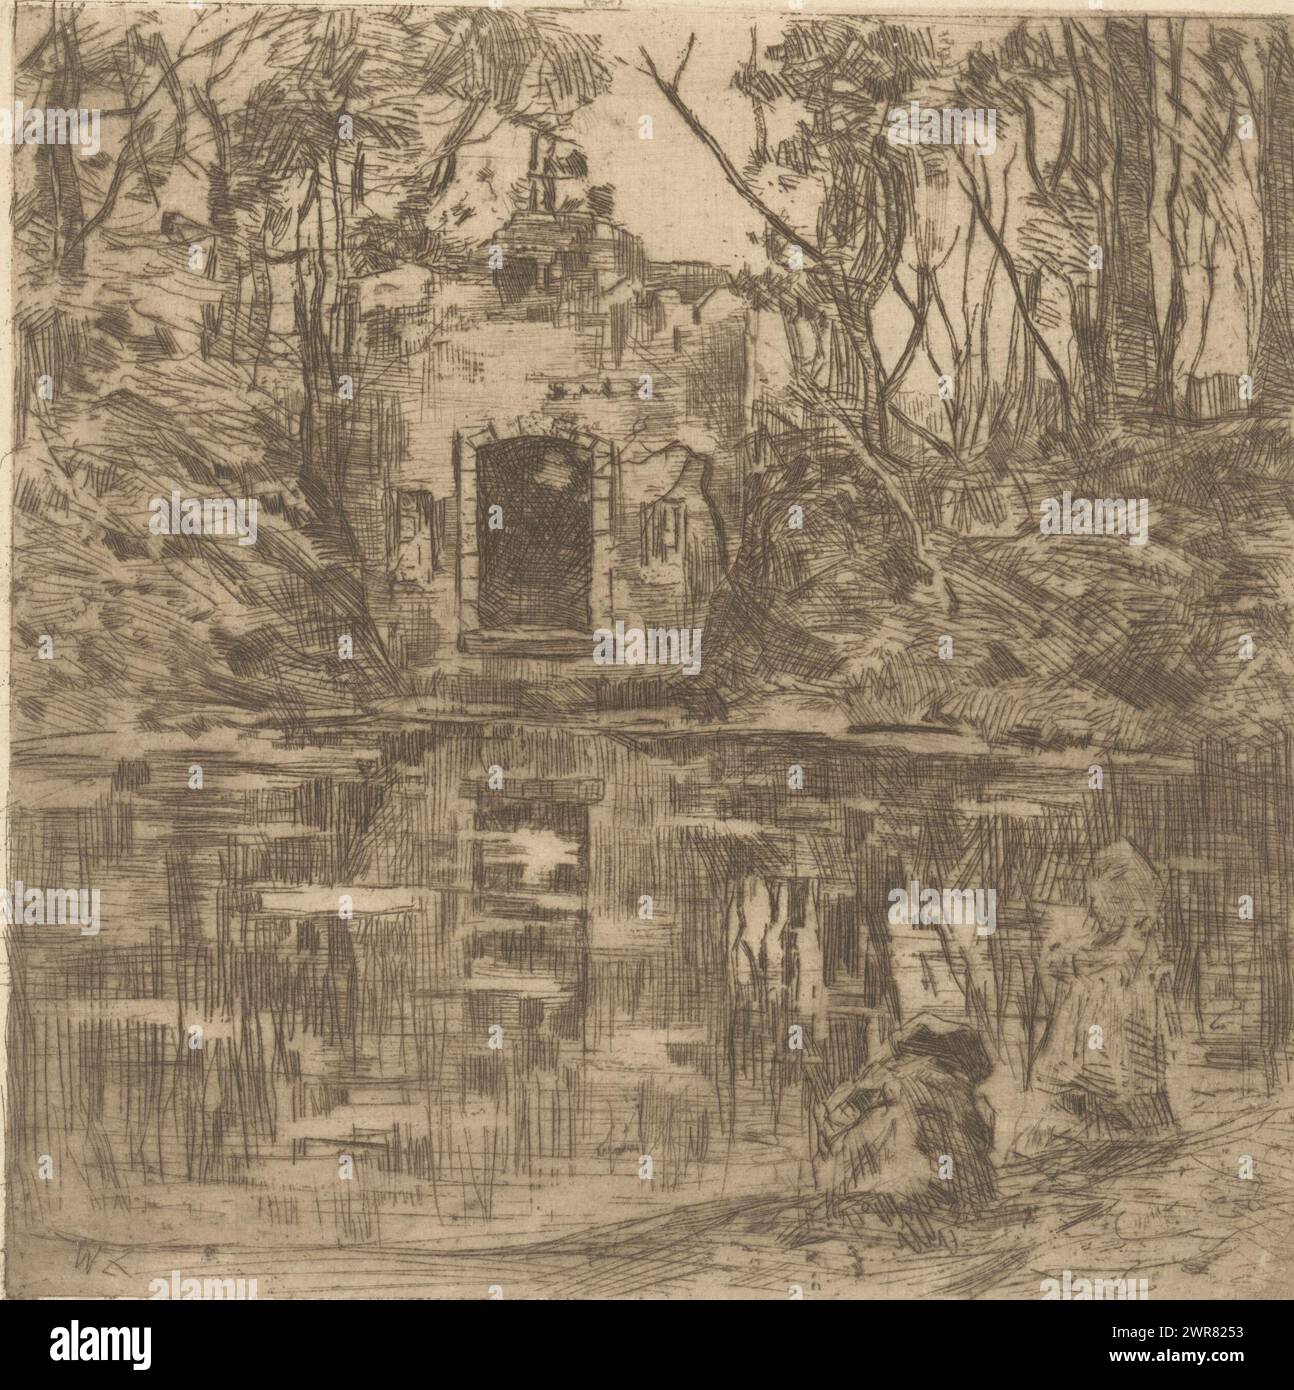 Ruin on a pond, Ruin on a pond (Lage Vuursche) (original title), print maker: Willem de Zwart, c. 1896, paper, etching, drypoint, height 151 mm × width 151 mm, print Stock Photo